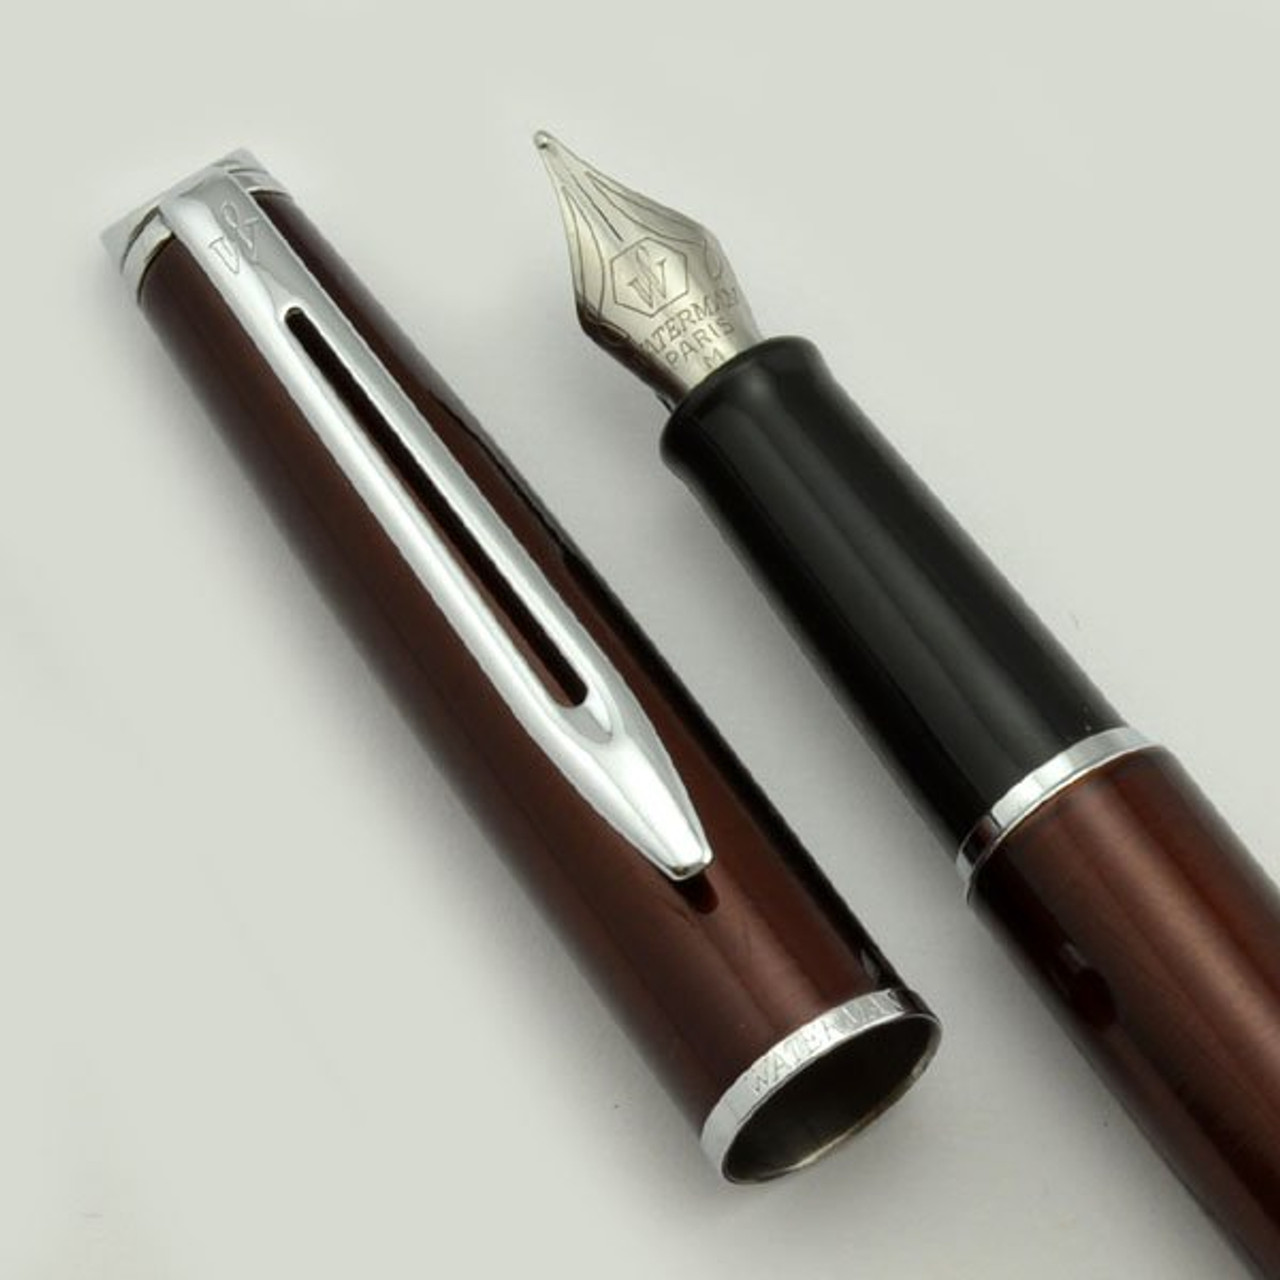 Waterman Hemisphere Fountain Pen - Brown Lacquer, Chrome Trim, Medium (Very Nice)